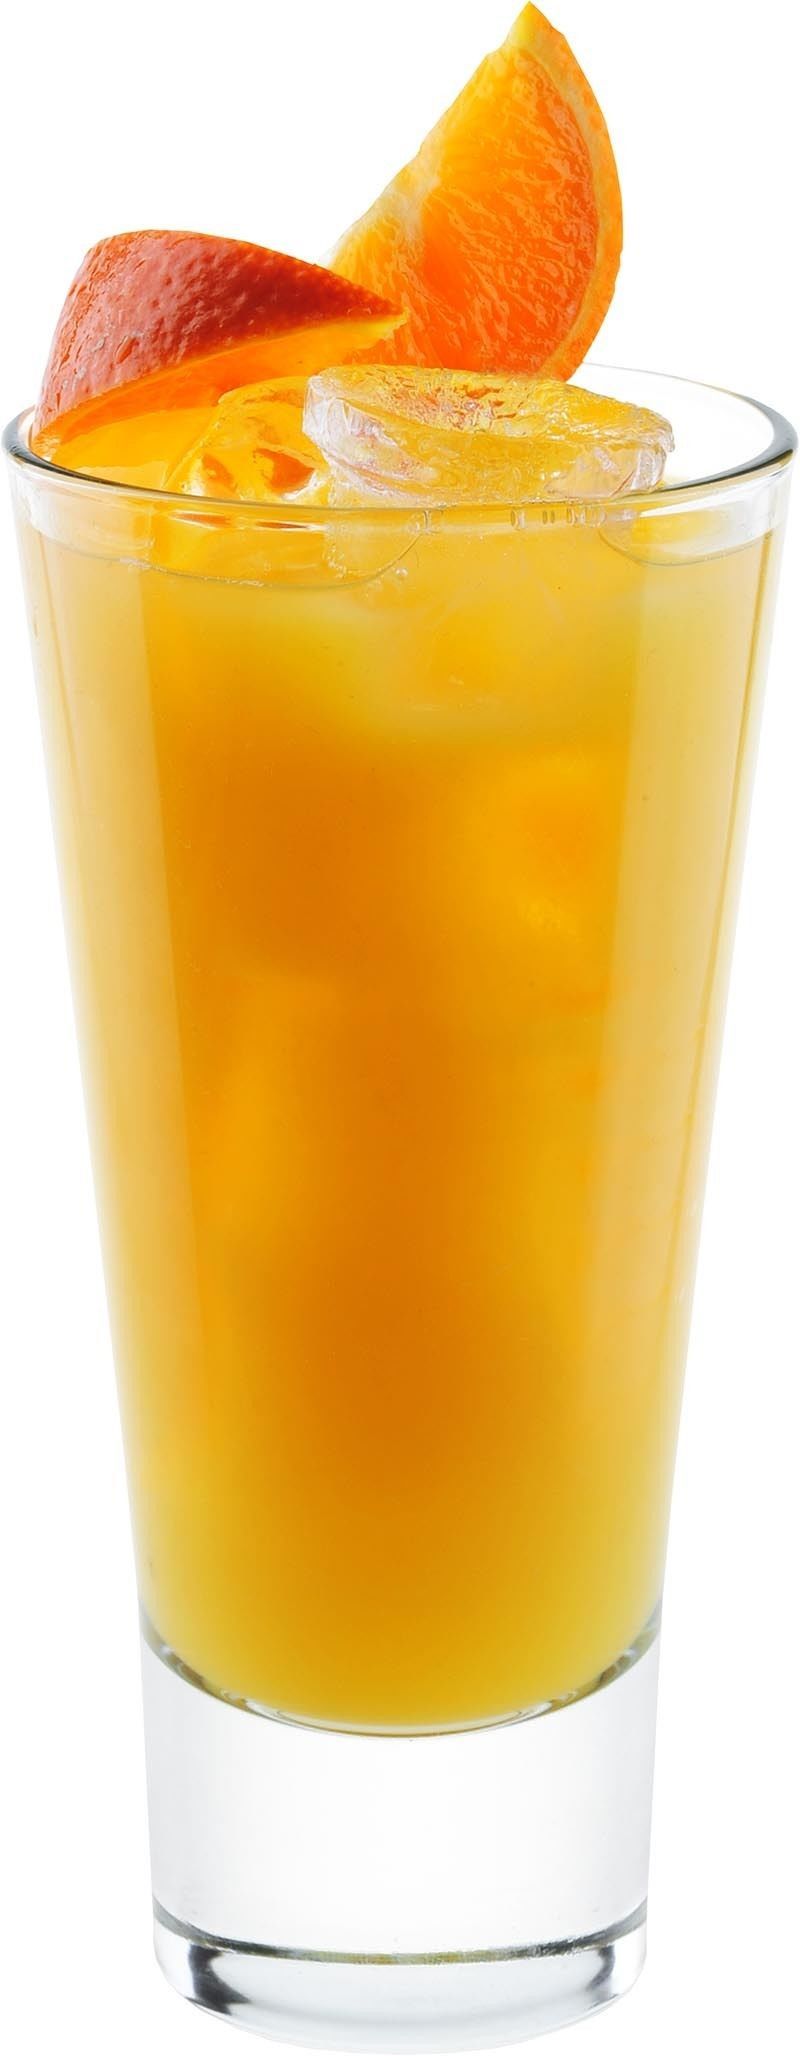 Файл:Водка мандарин (коктейль).jpg